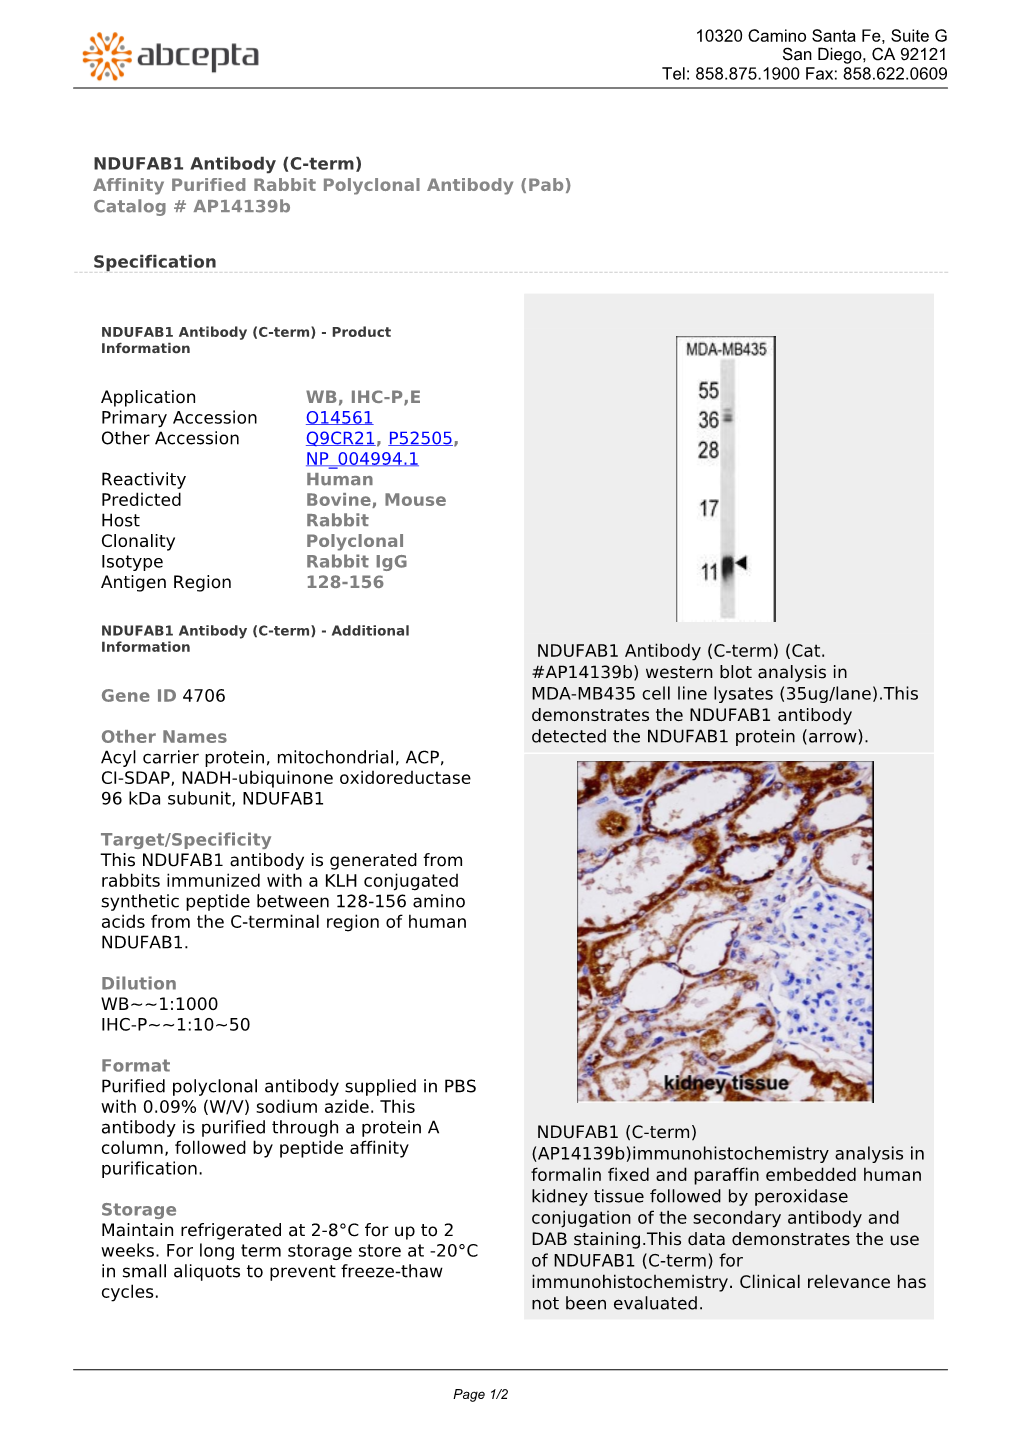 NDUFAB1 Antibody (C-Term) Affinity Purified Rabbit Polyclonal Antibody (Pab) Catalog # Ap14139b